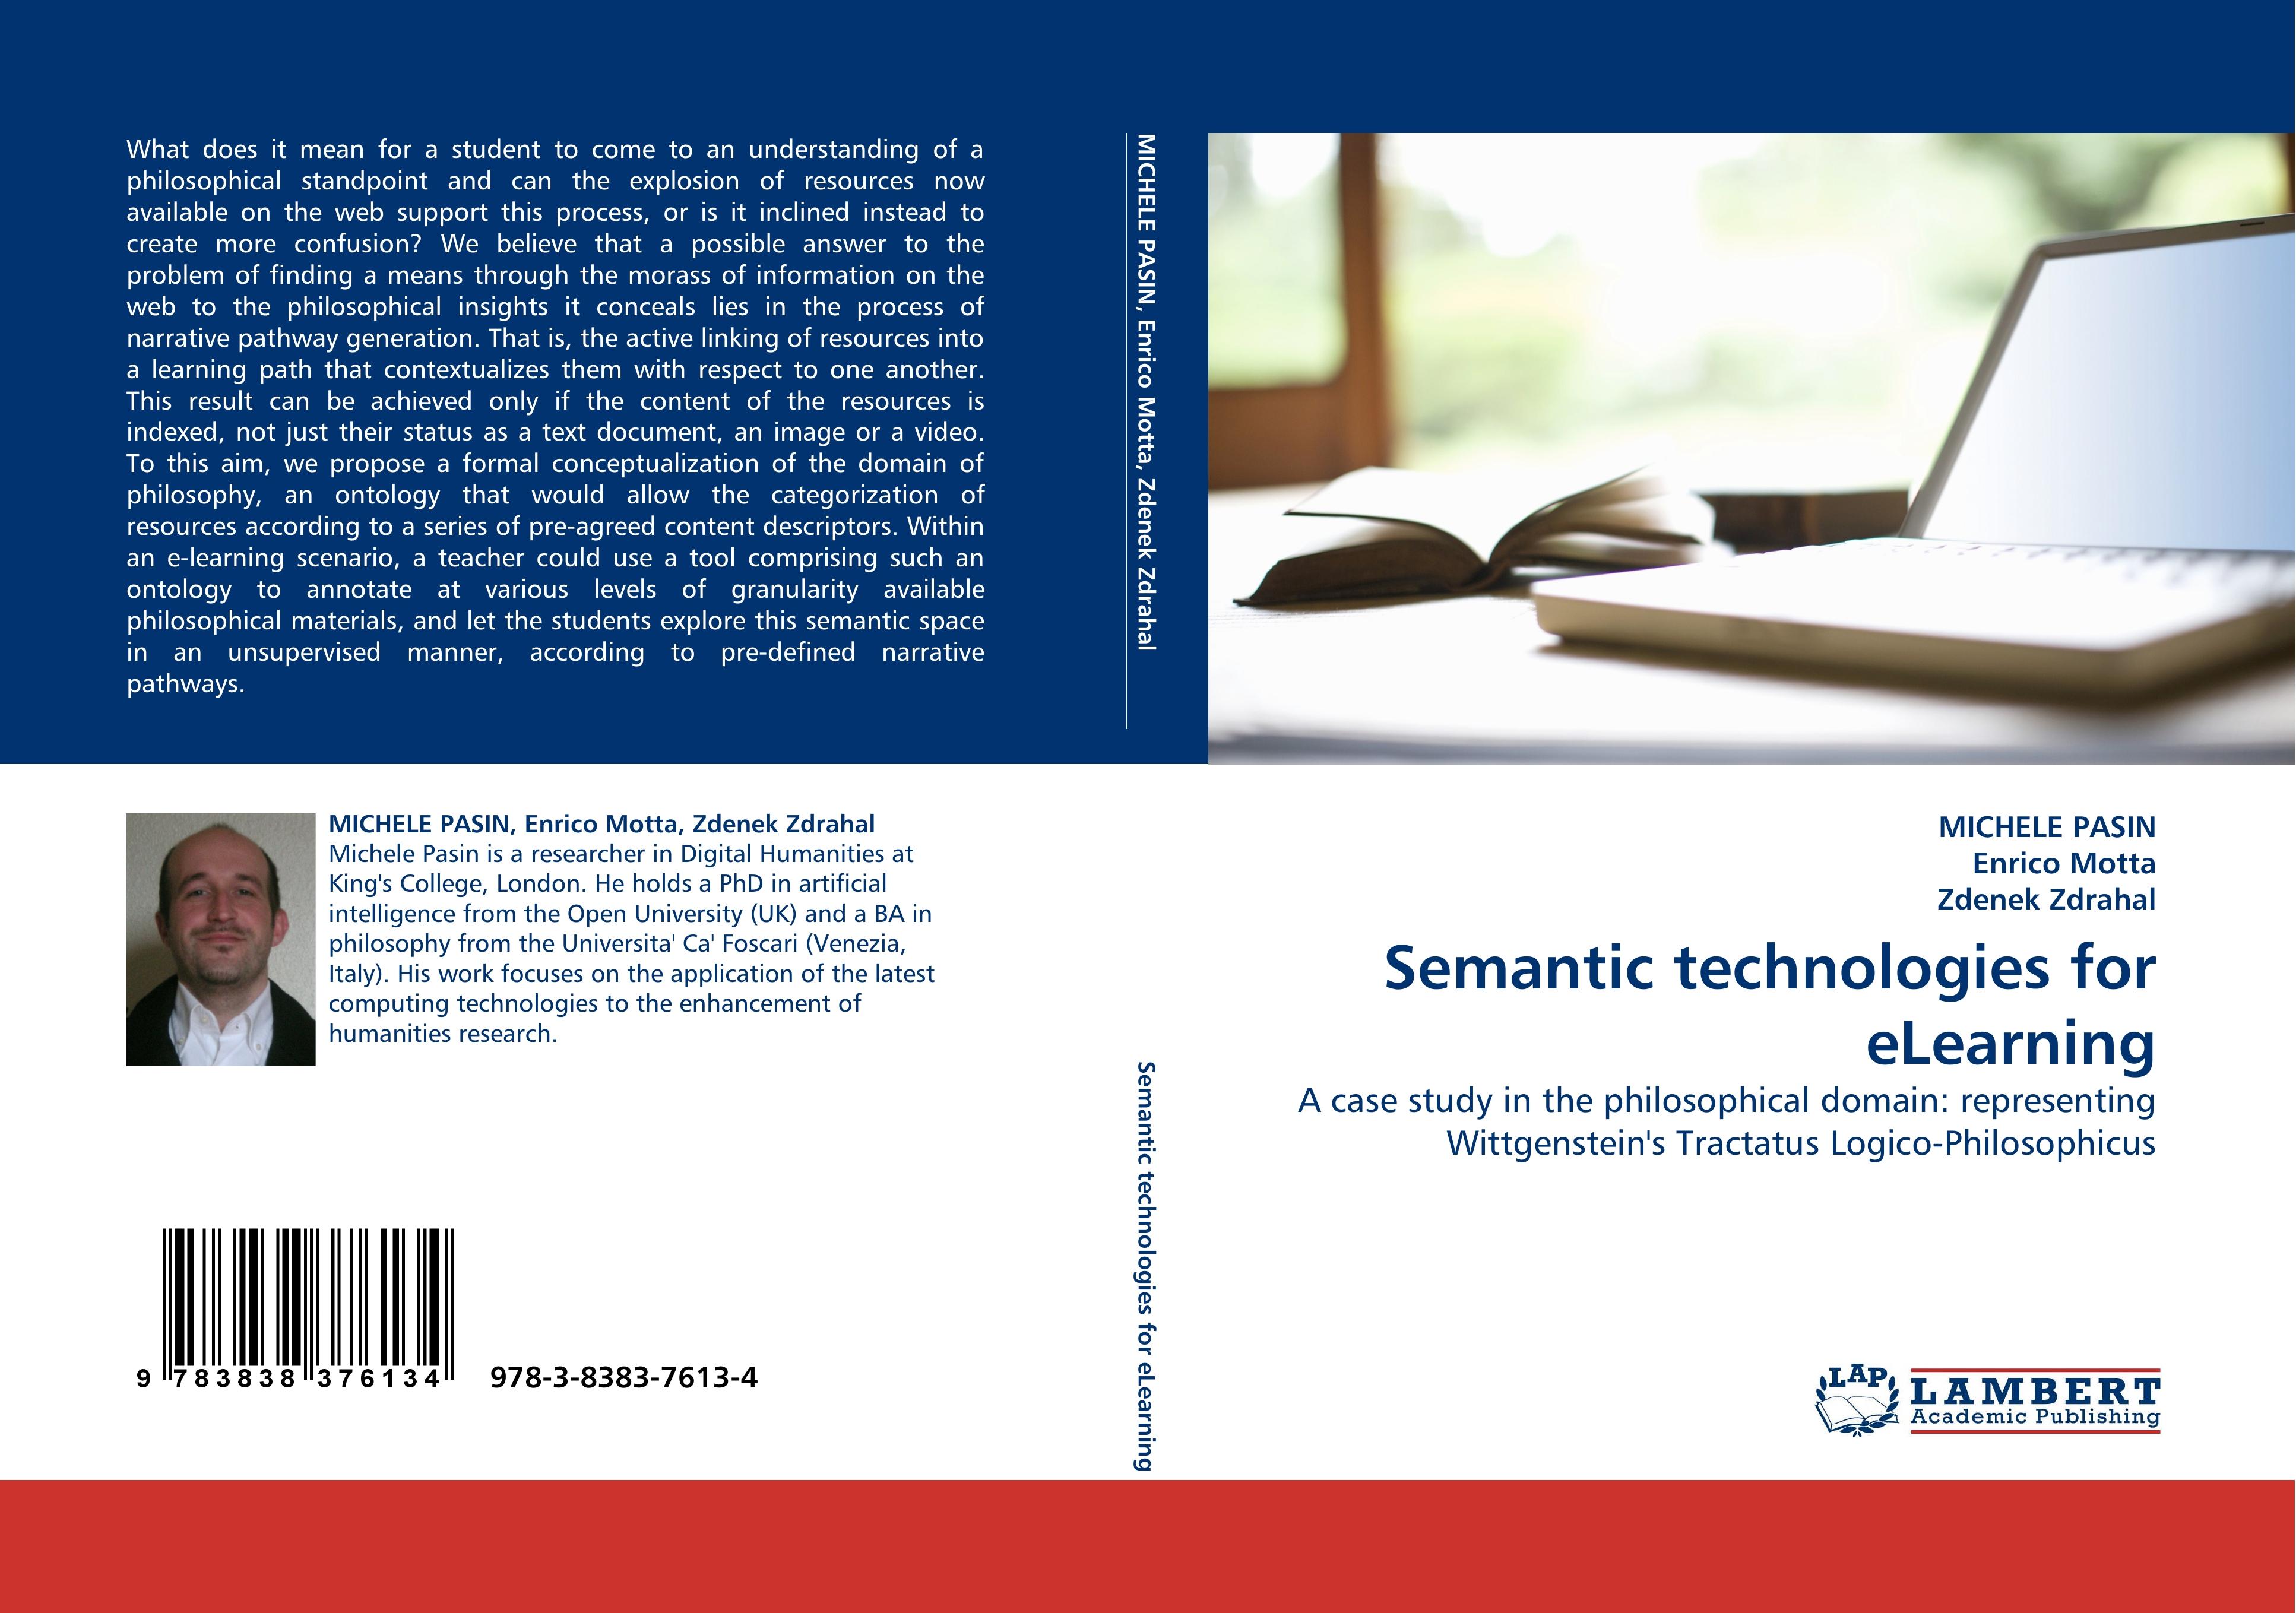 Semantic technologies for eLearning - MICHELE PASIN Enrico Motta Zdenek Zdrahal